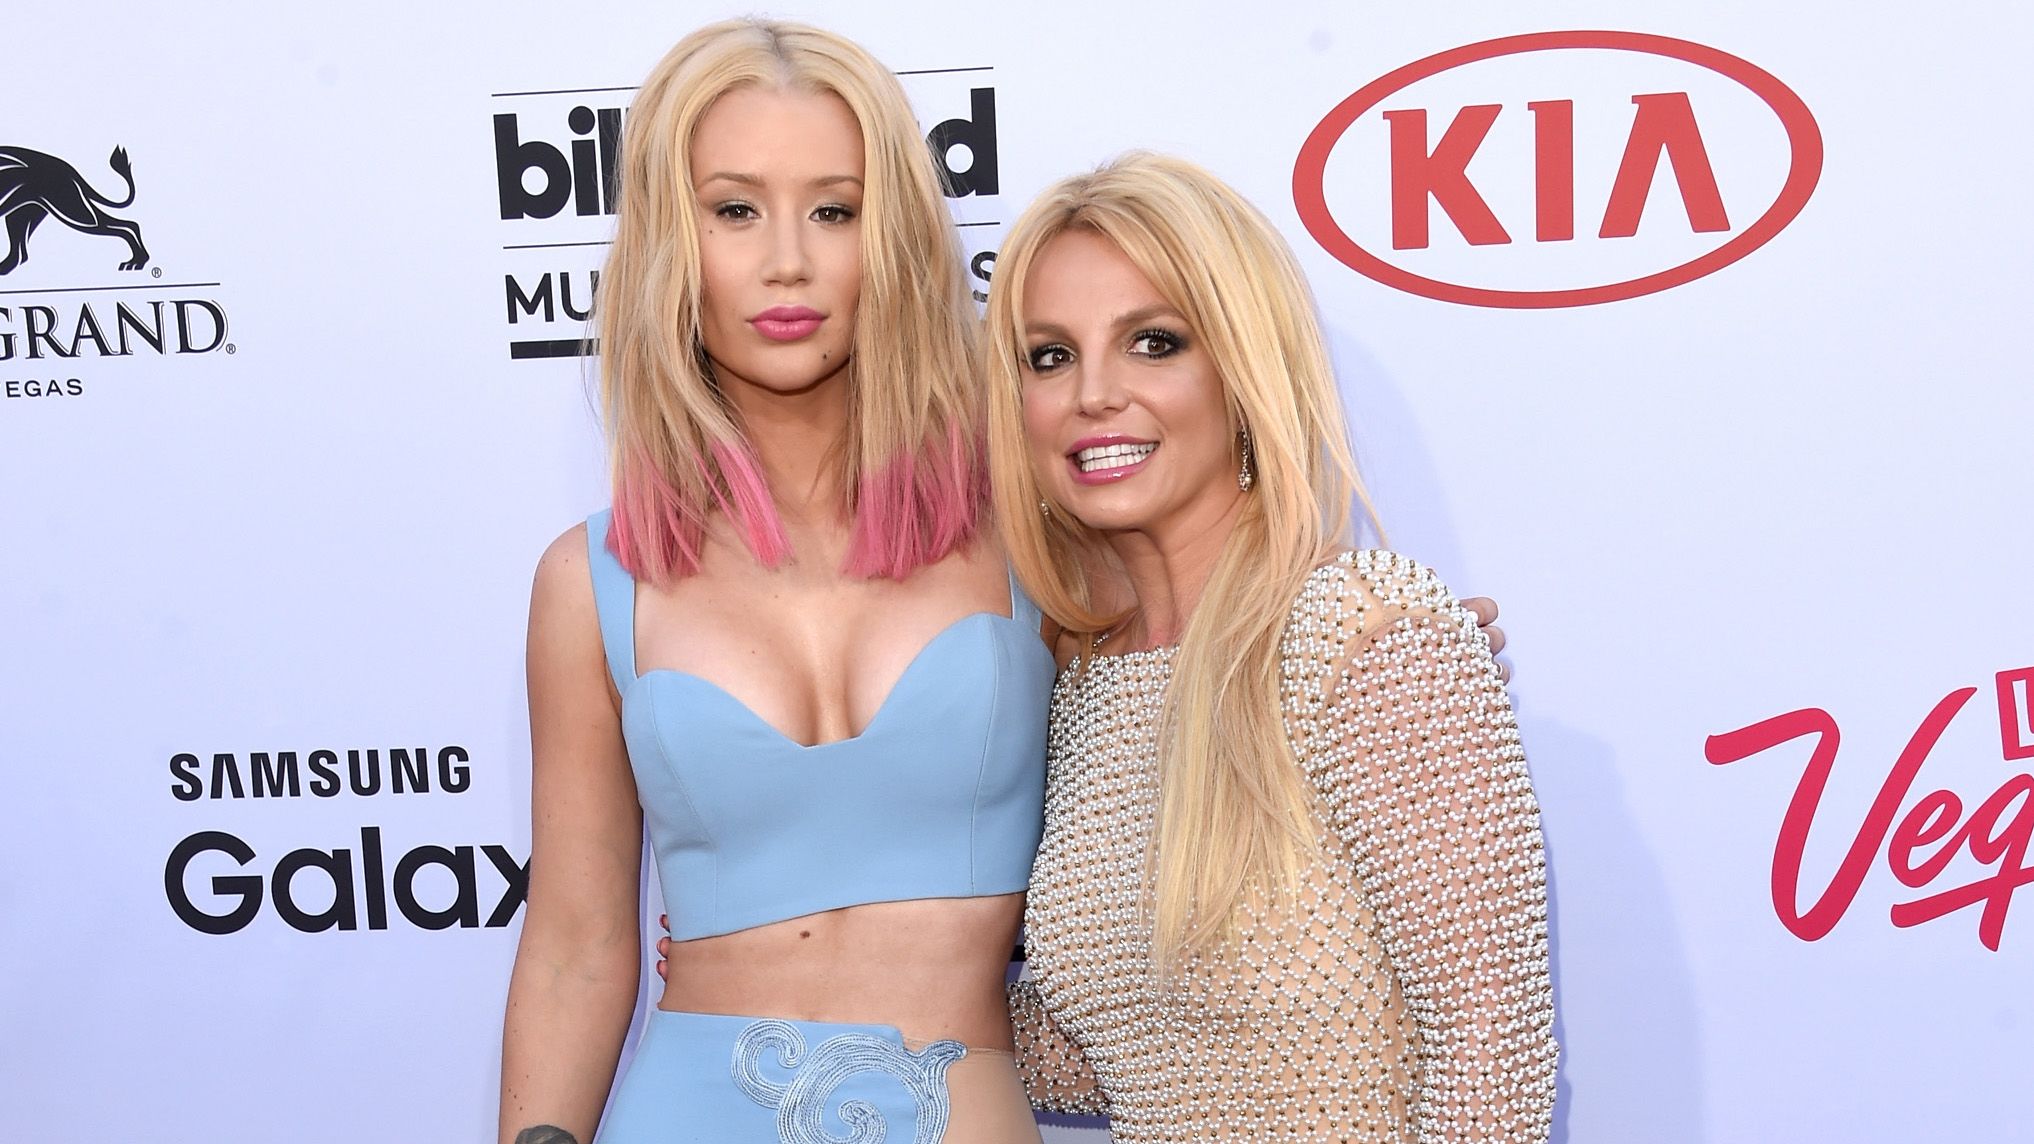 Celebrity Porn Iggy - Britney Spears, Iggy Azalea in Twitter feud? | CNN